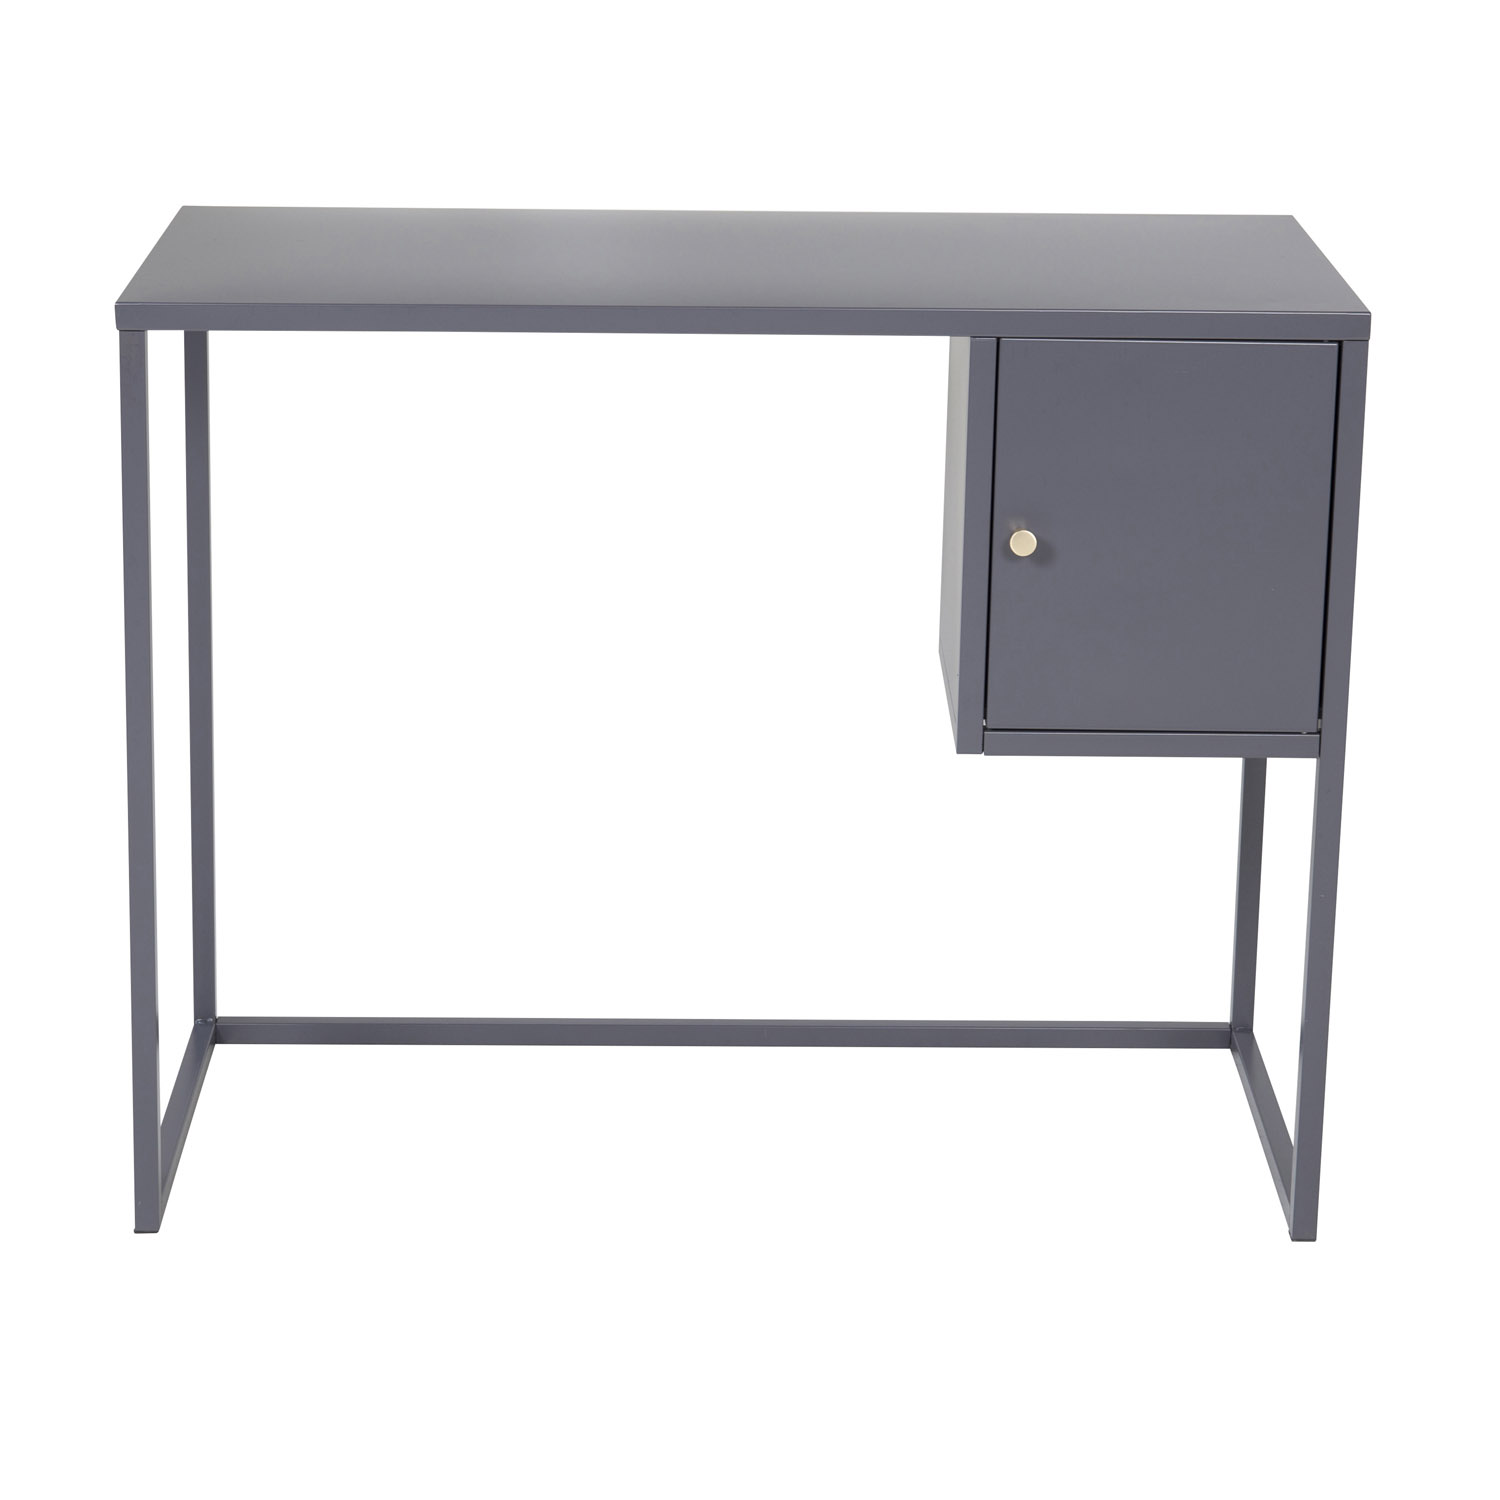 2: VENTURE DESIGN Bakal skrivebord, m. 1 låge - lysegrå stol (95x45)